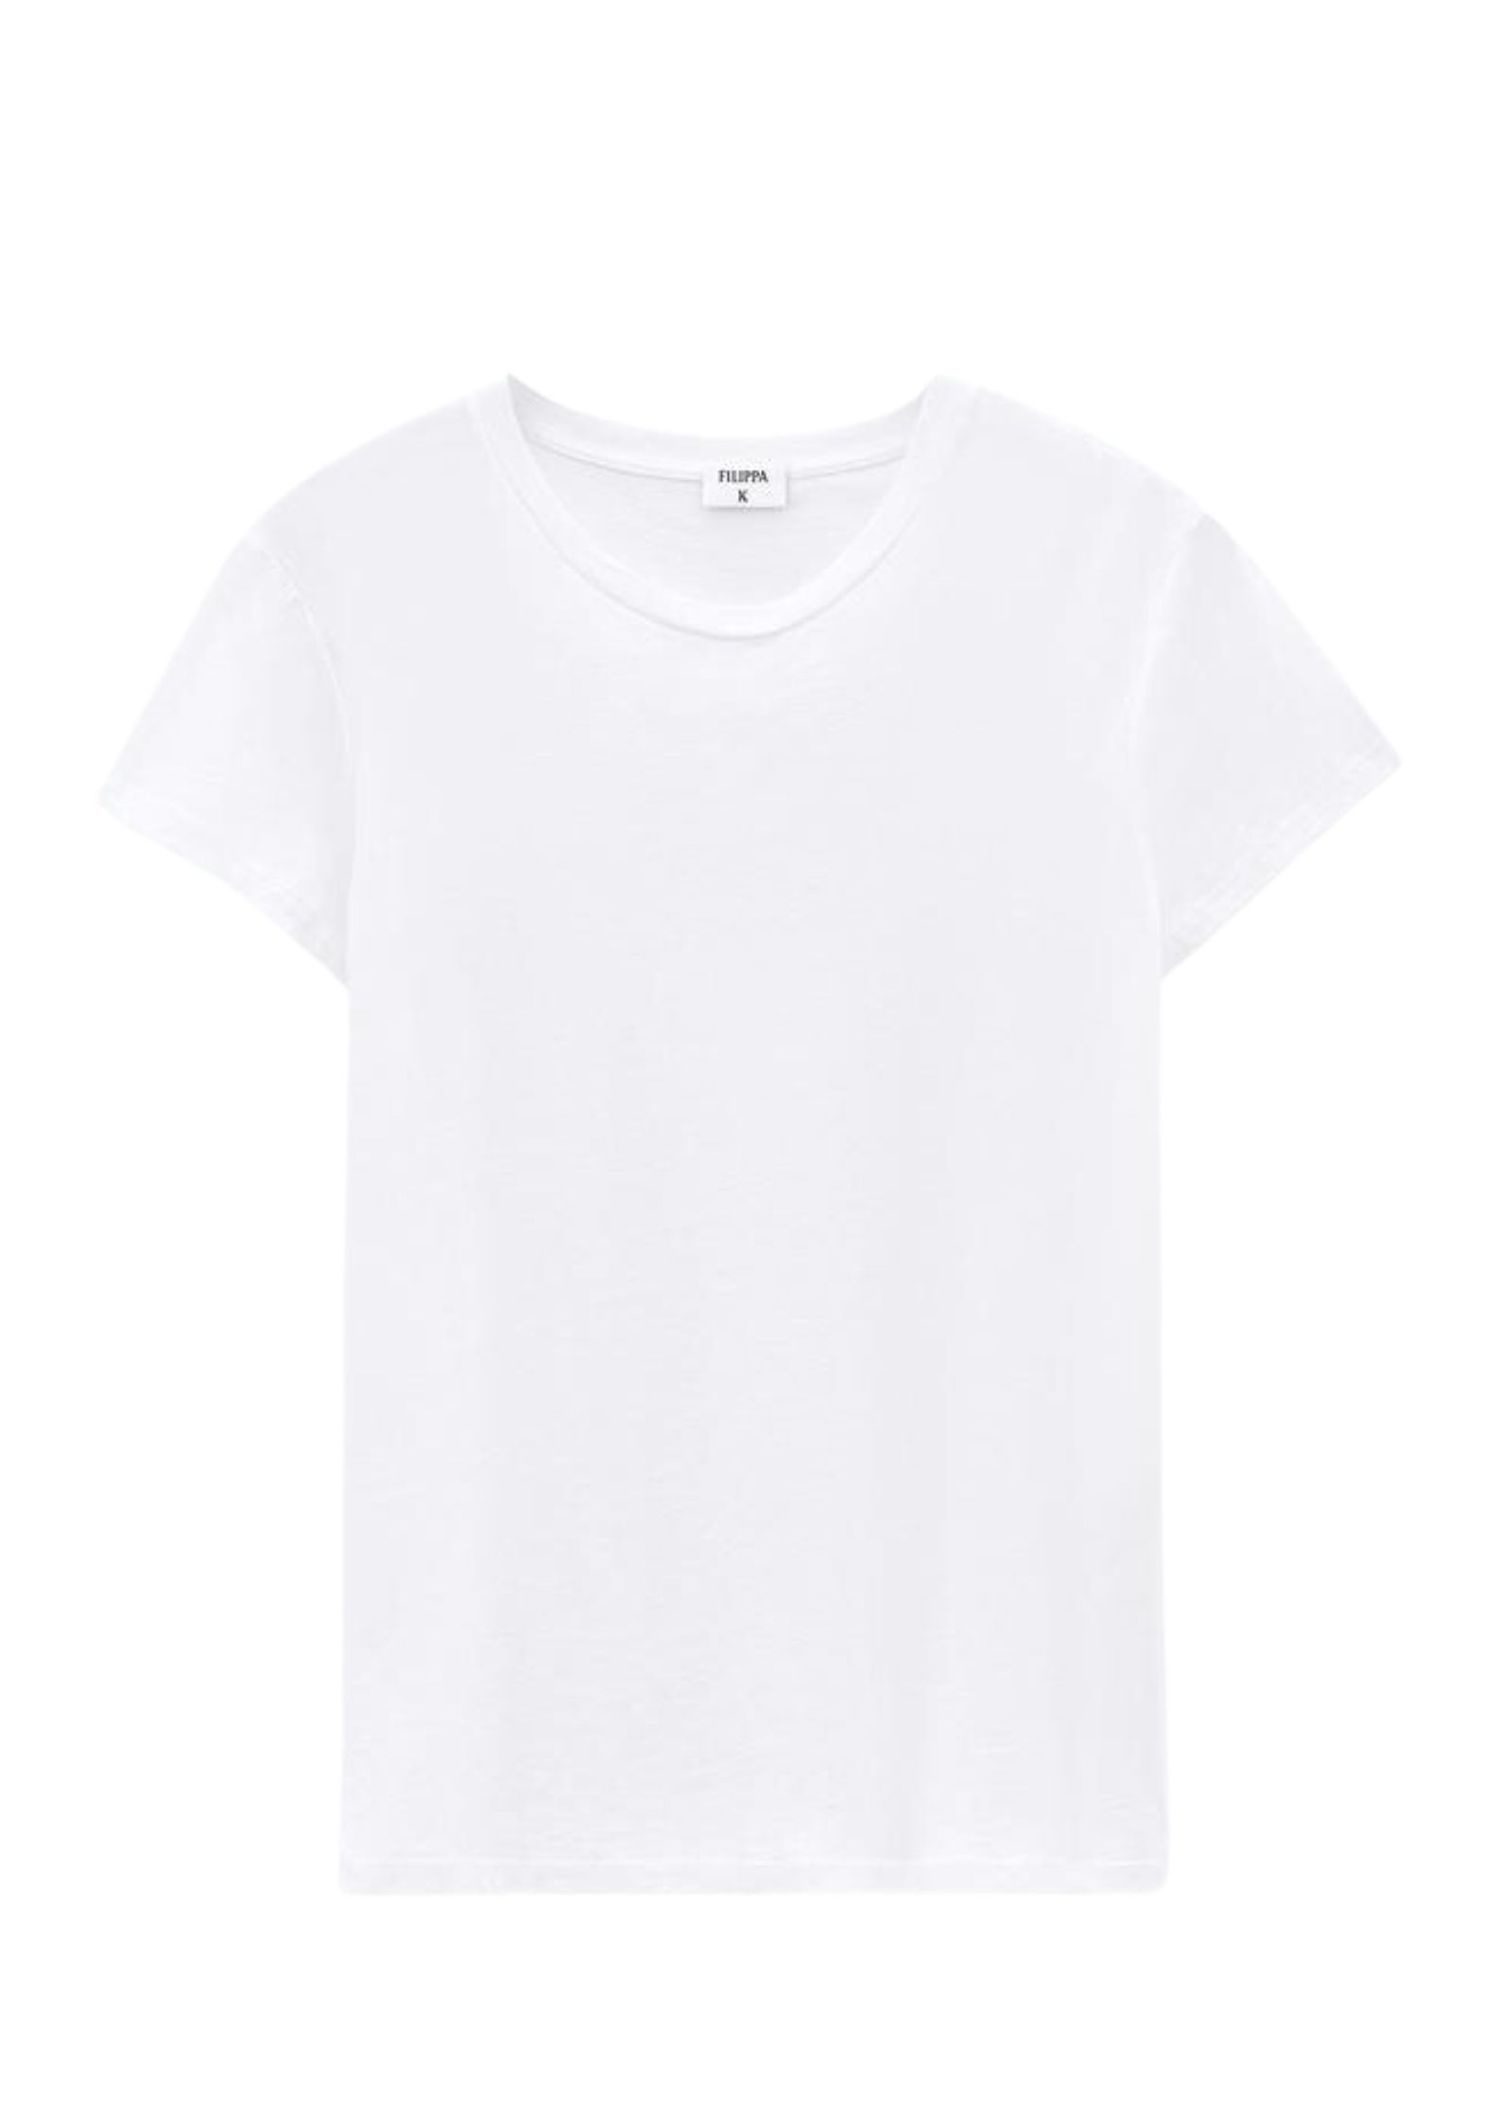 Men - White Oversized Fit Cotton T-Shirt - Size: S - H&M